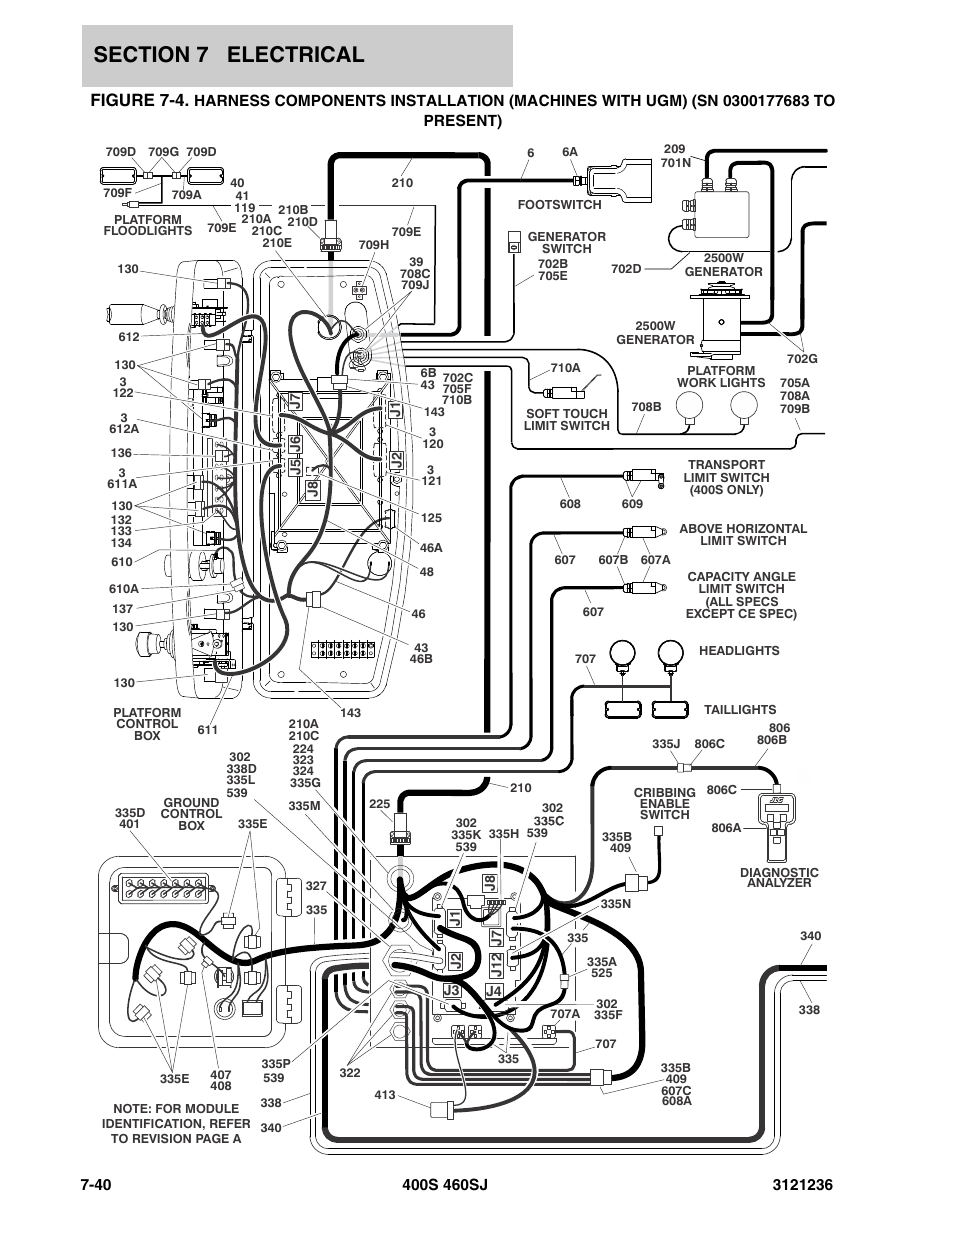 Figure 7-4 | JLG 460SJ Parts Manual User Manual | Page 364 / 430